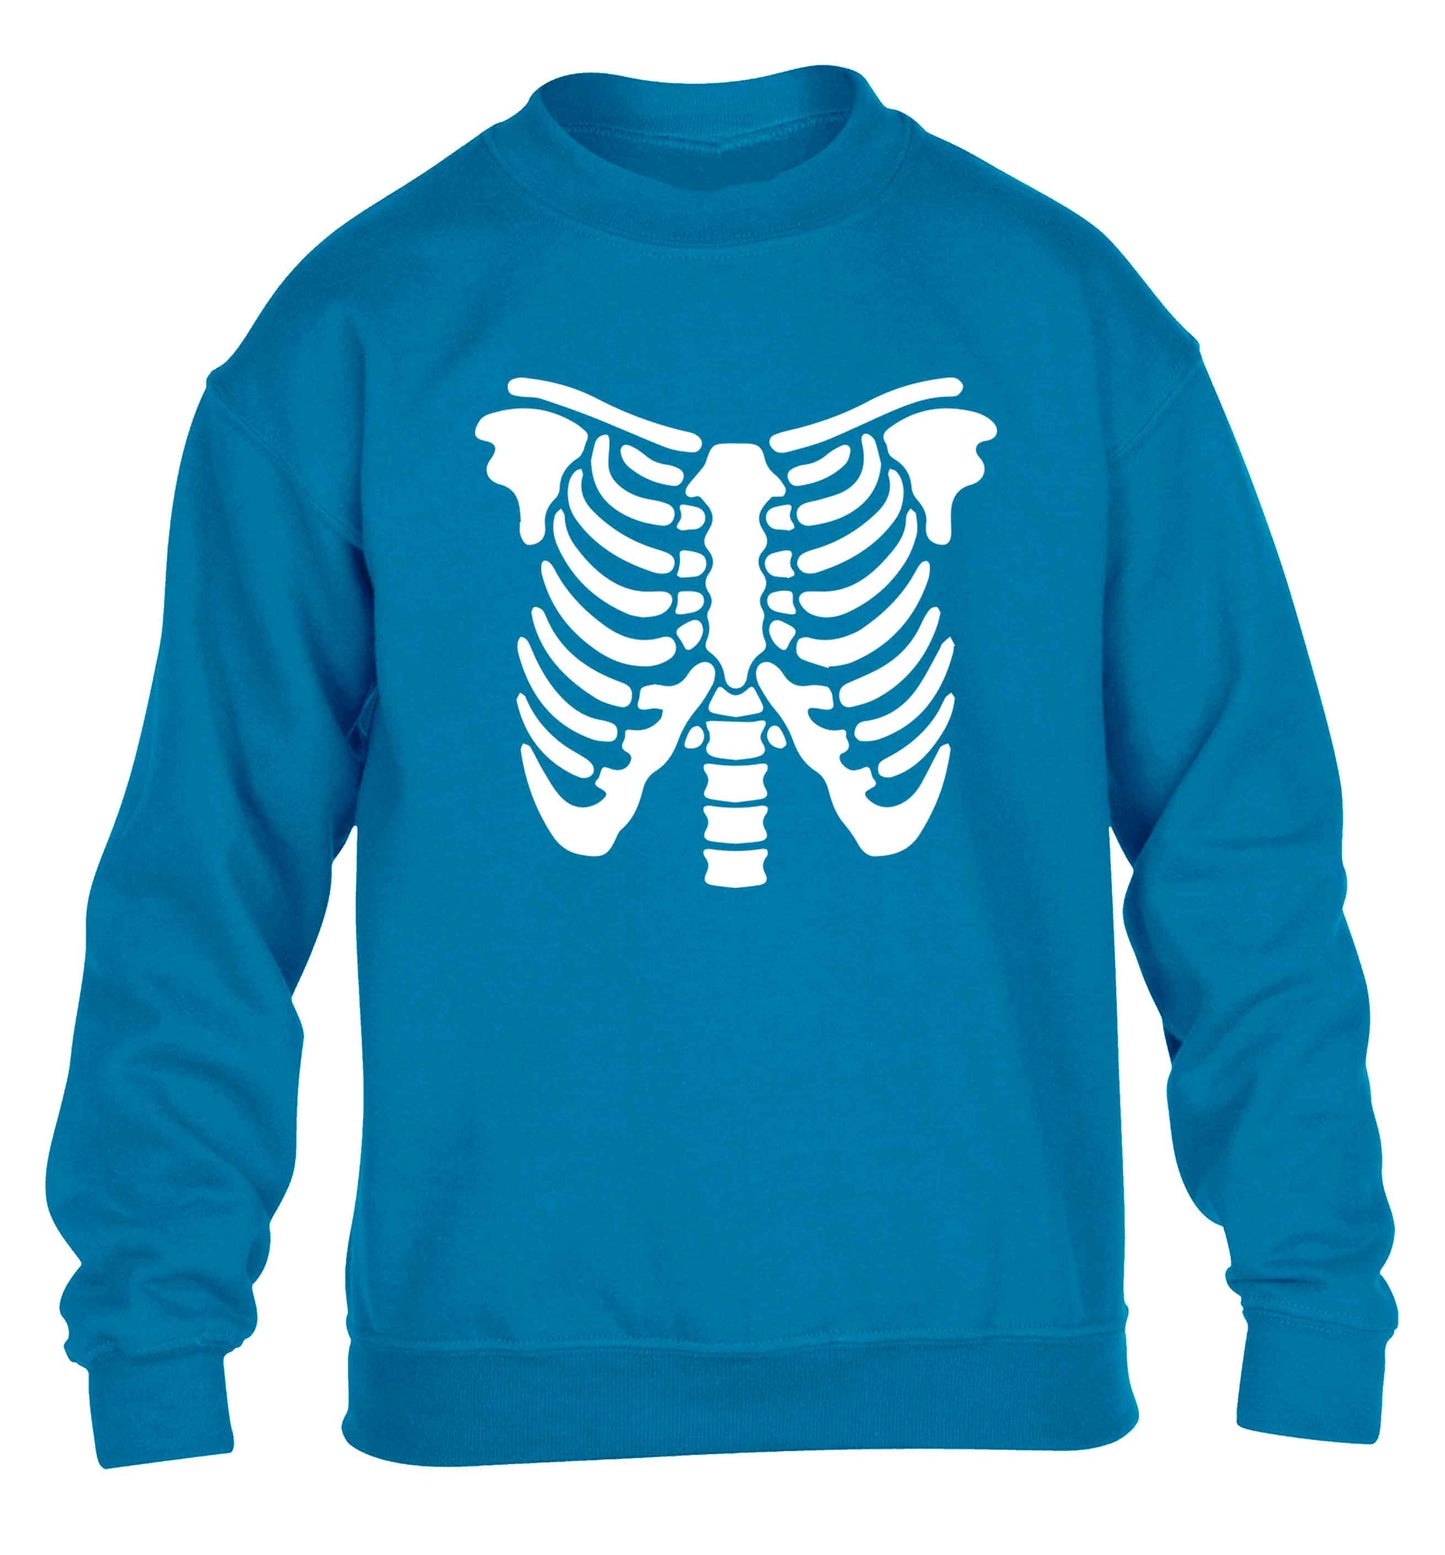 Skeleton ribcage children's blue sweater 12-13 Years